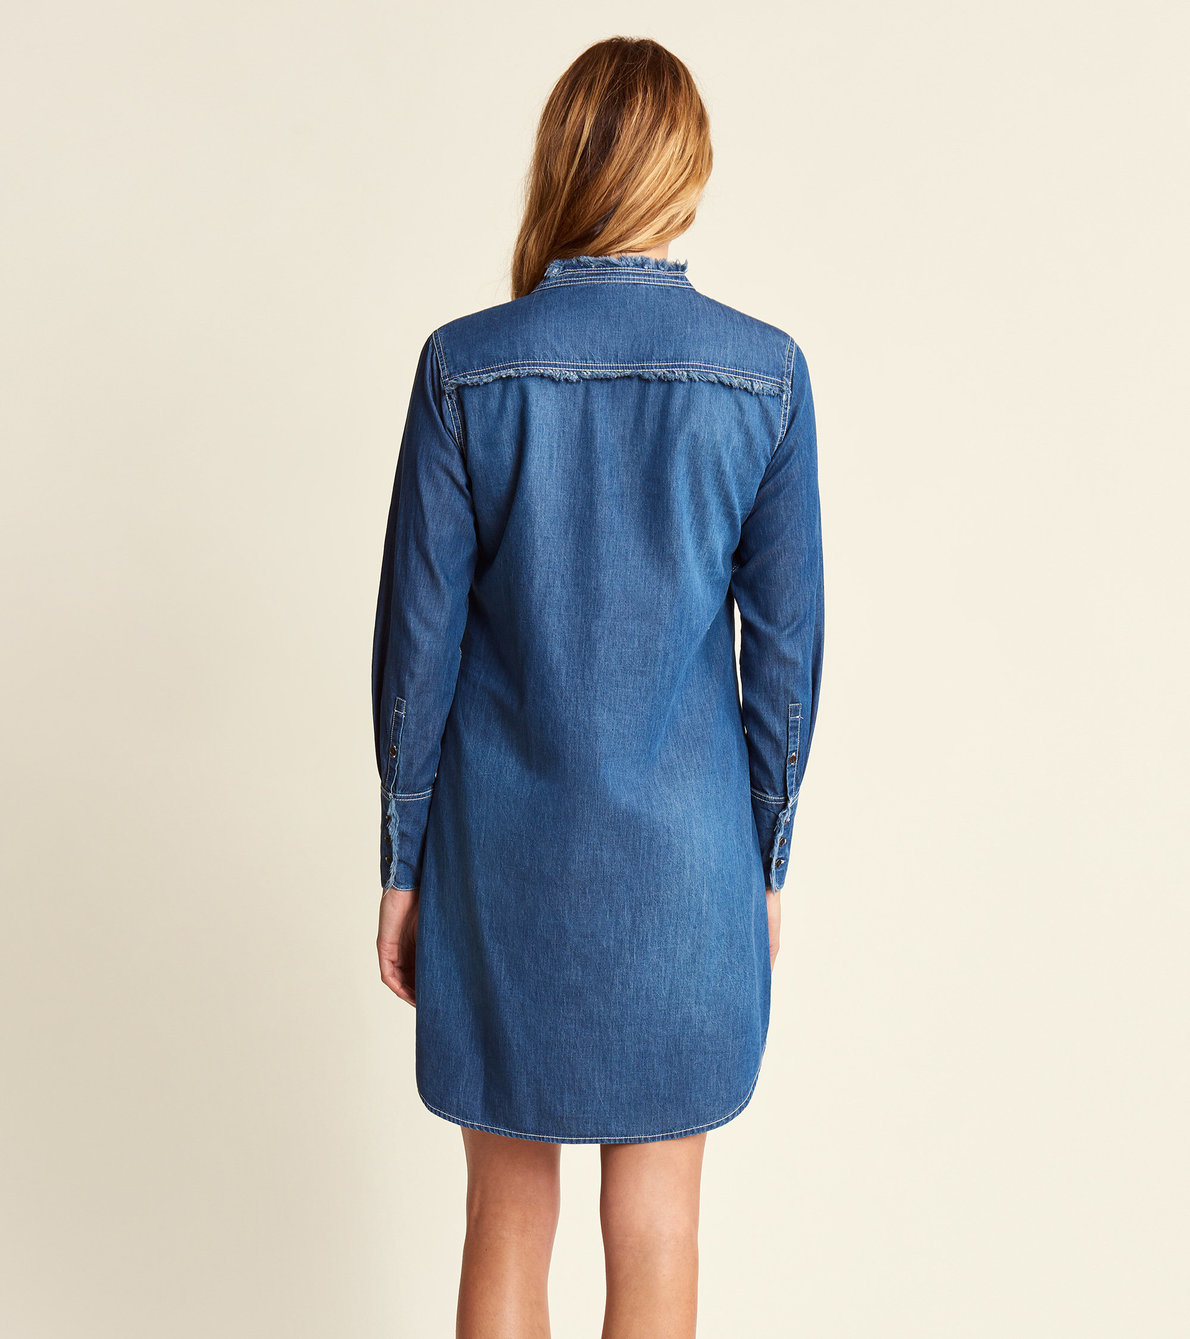 View larger image of Denim Shirt Dress - Medium Blue